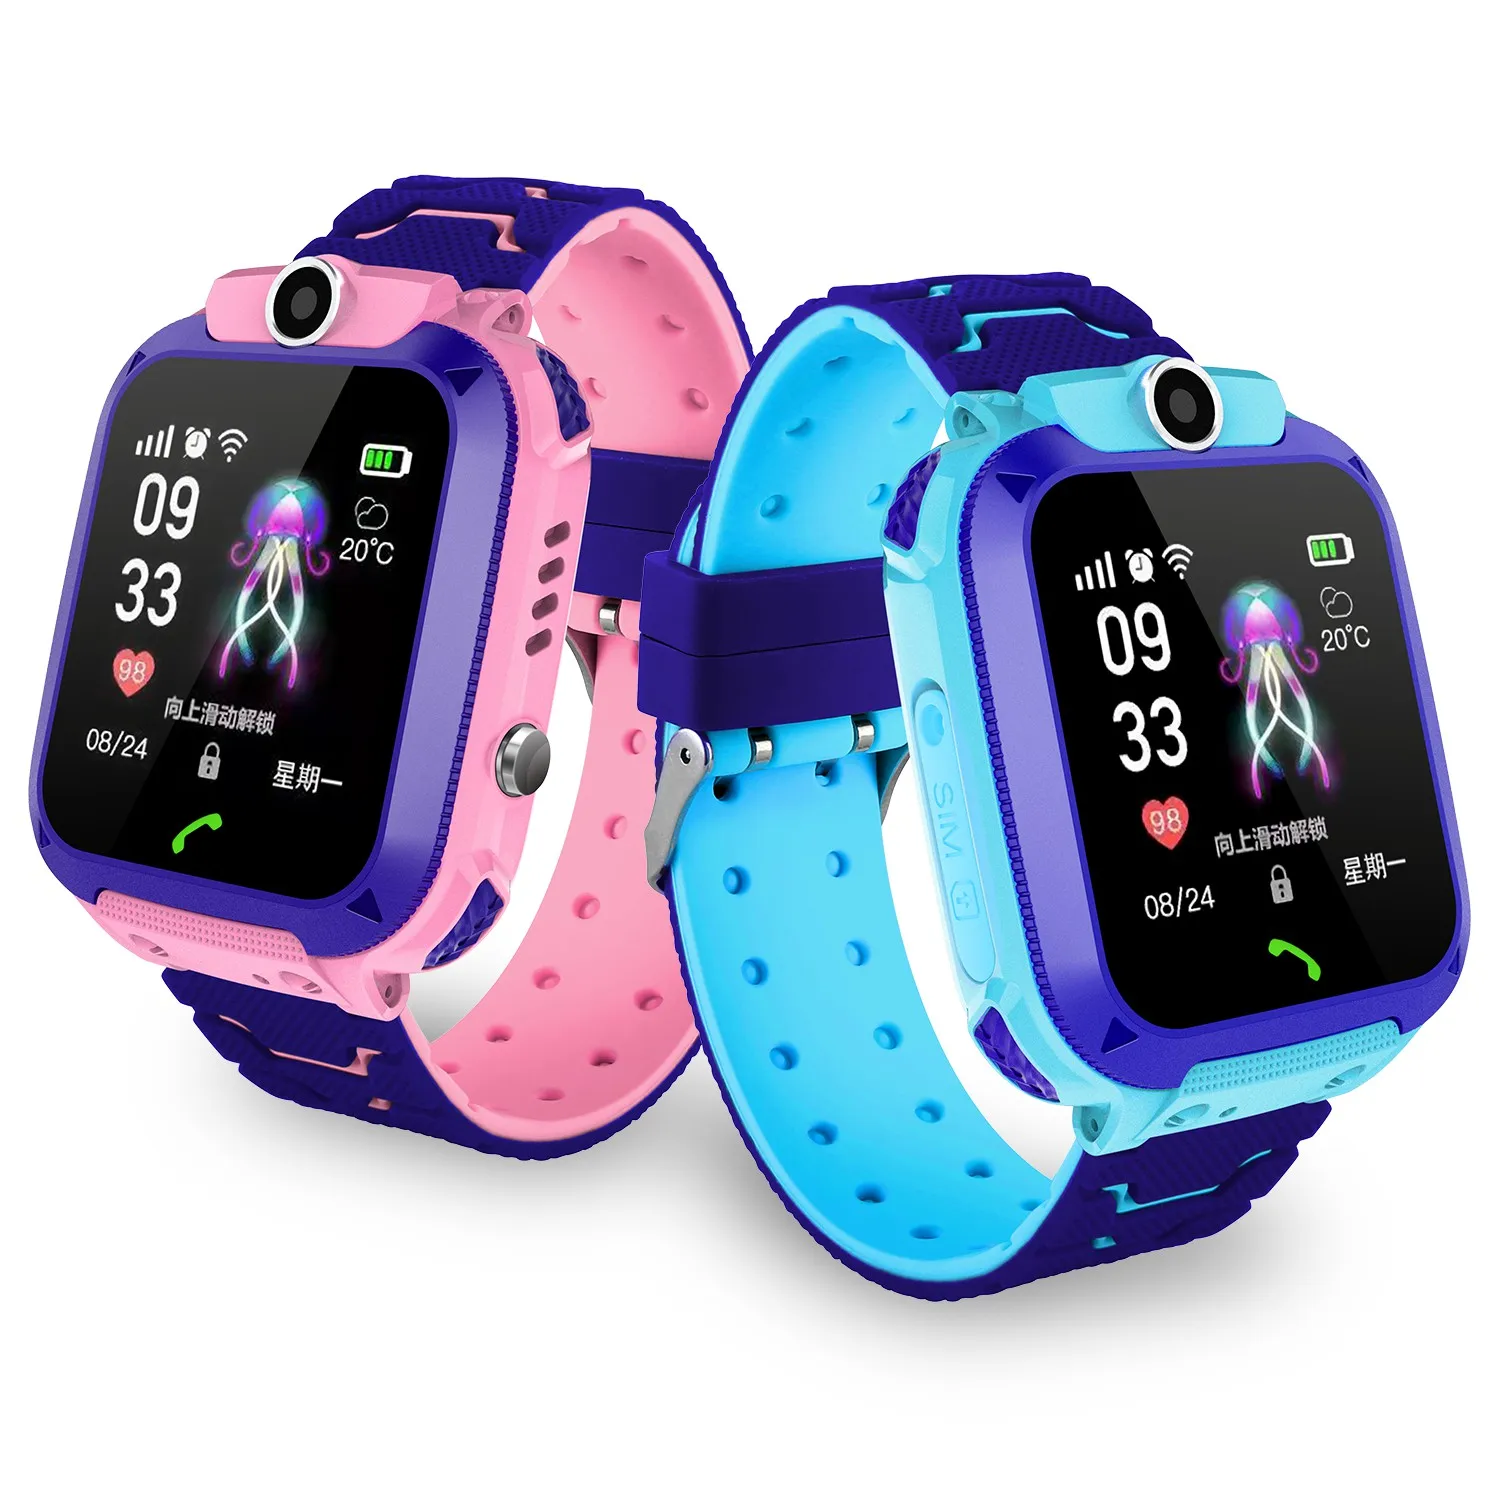 

Amazon Hot Sale Child smart watch Q12 Smartwatch 2G Child Anti-Lost SOS Call GSM LBS Location Kids smart watch Q12